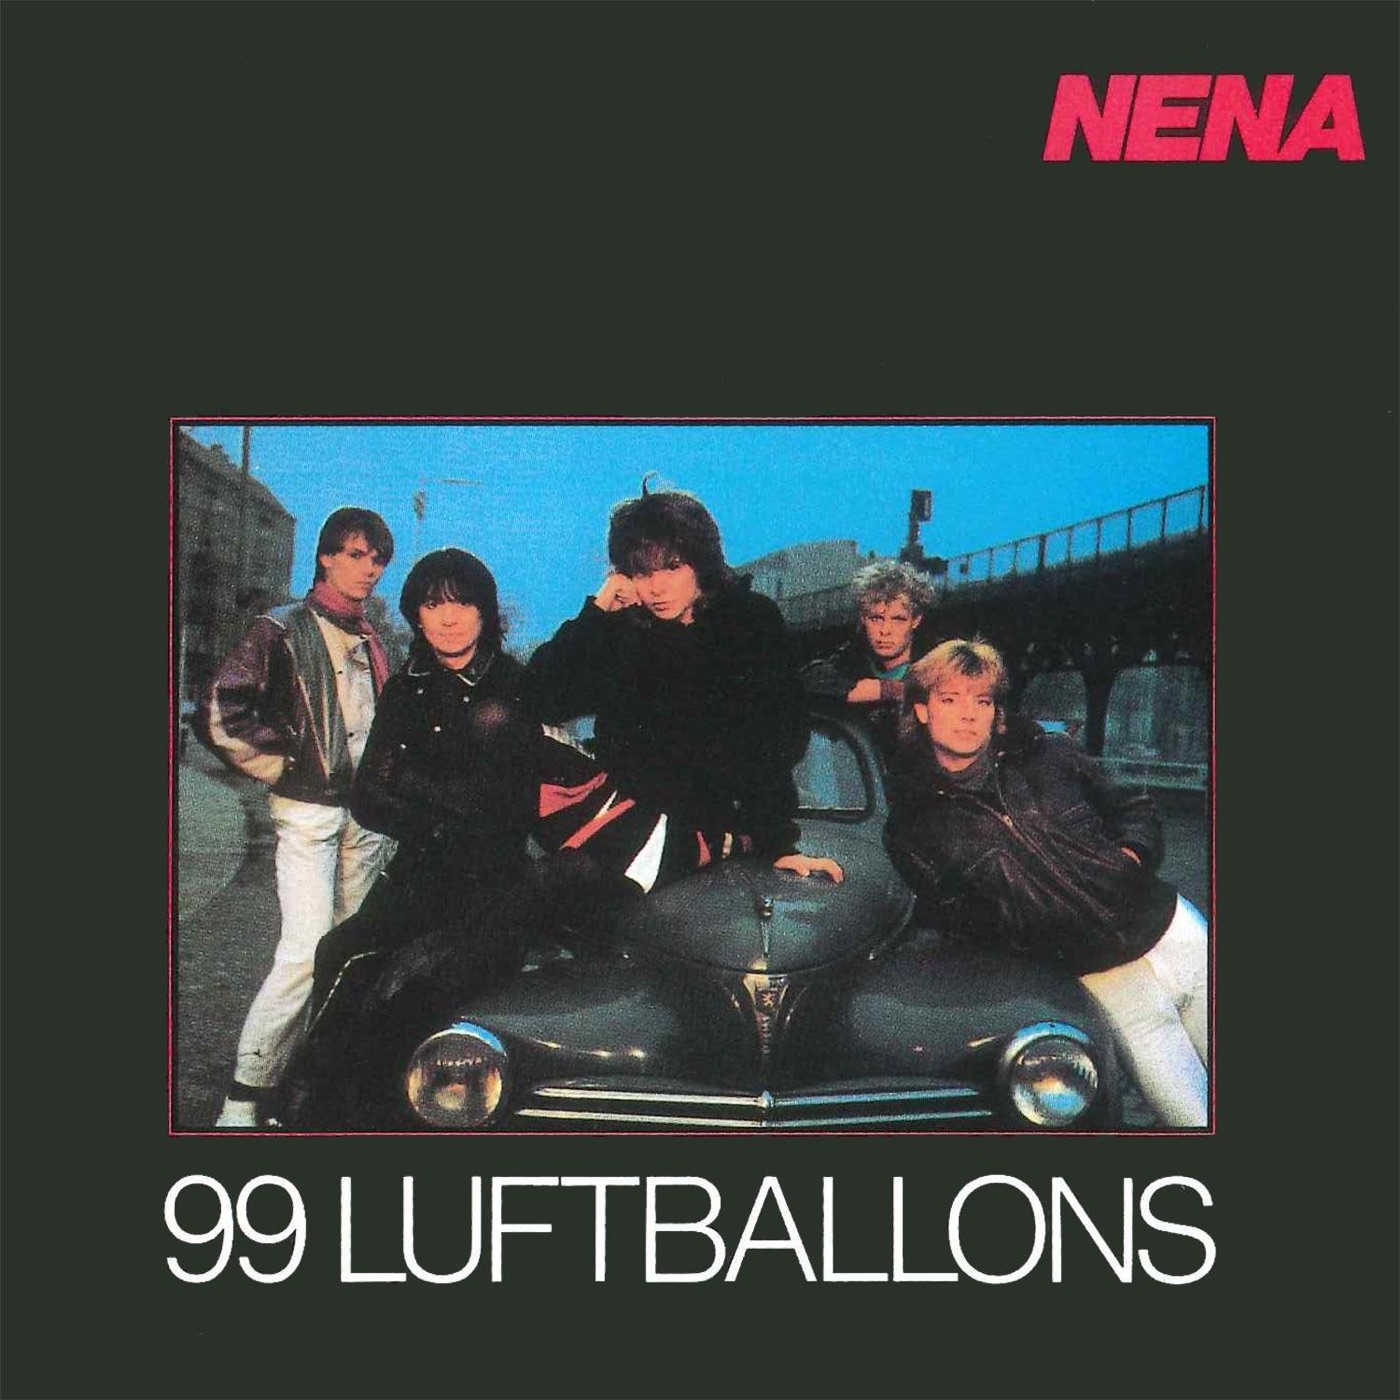 99 Luftballons by Nena, 99 Luftballons